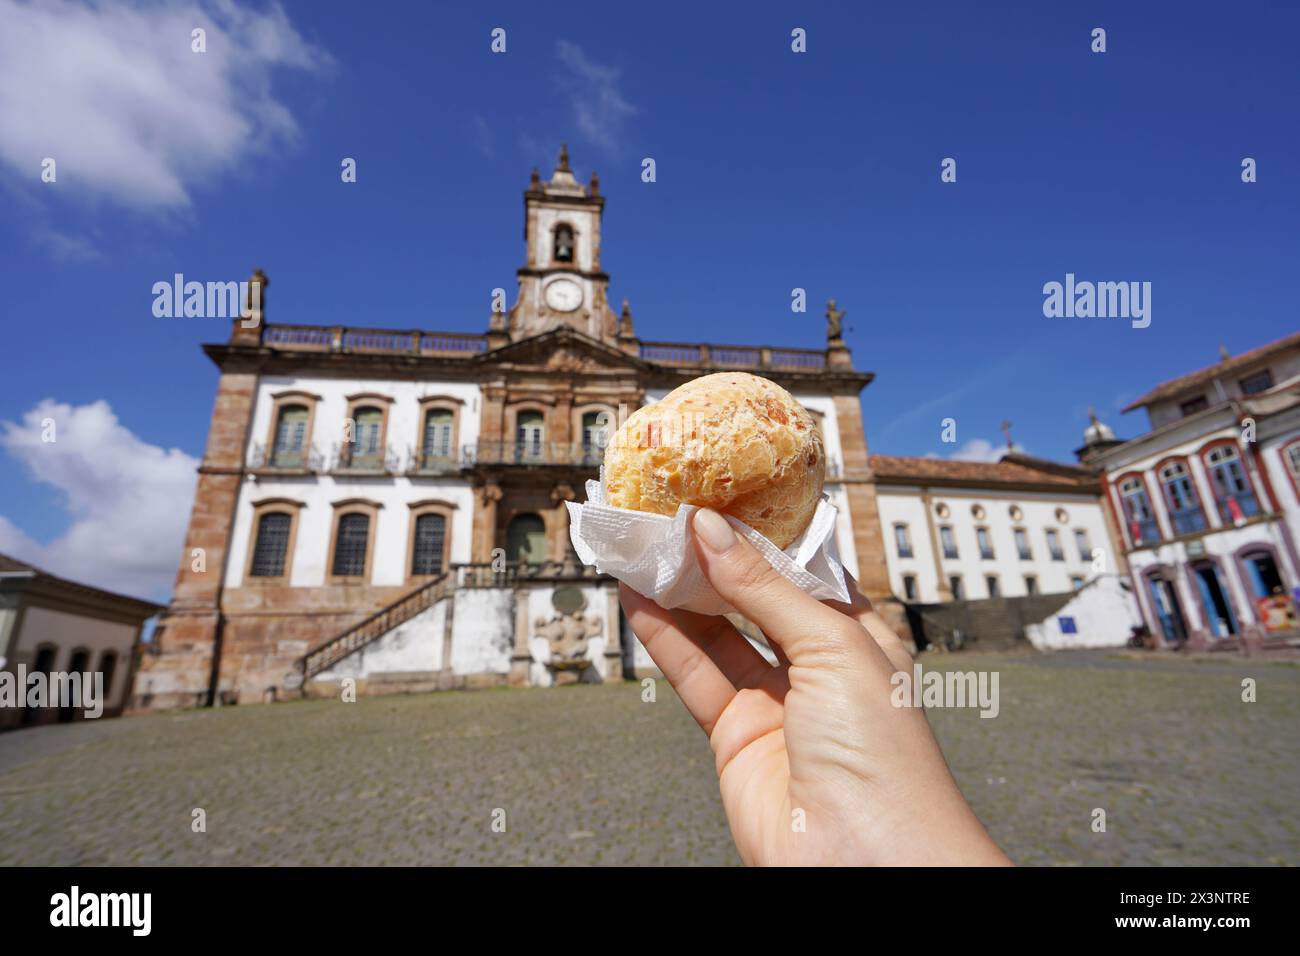 Pao de queijo (Brazilian cheese bun) in Tiradentes Square, Ouro Preto, Minas Gerais, Brazil, the city is World Heritage Site by UNESCO Stock Photo